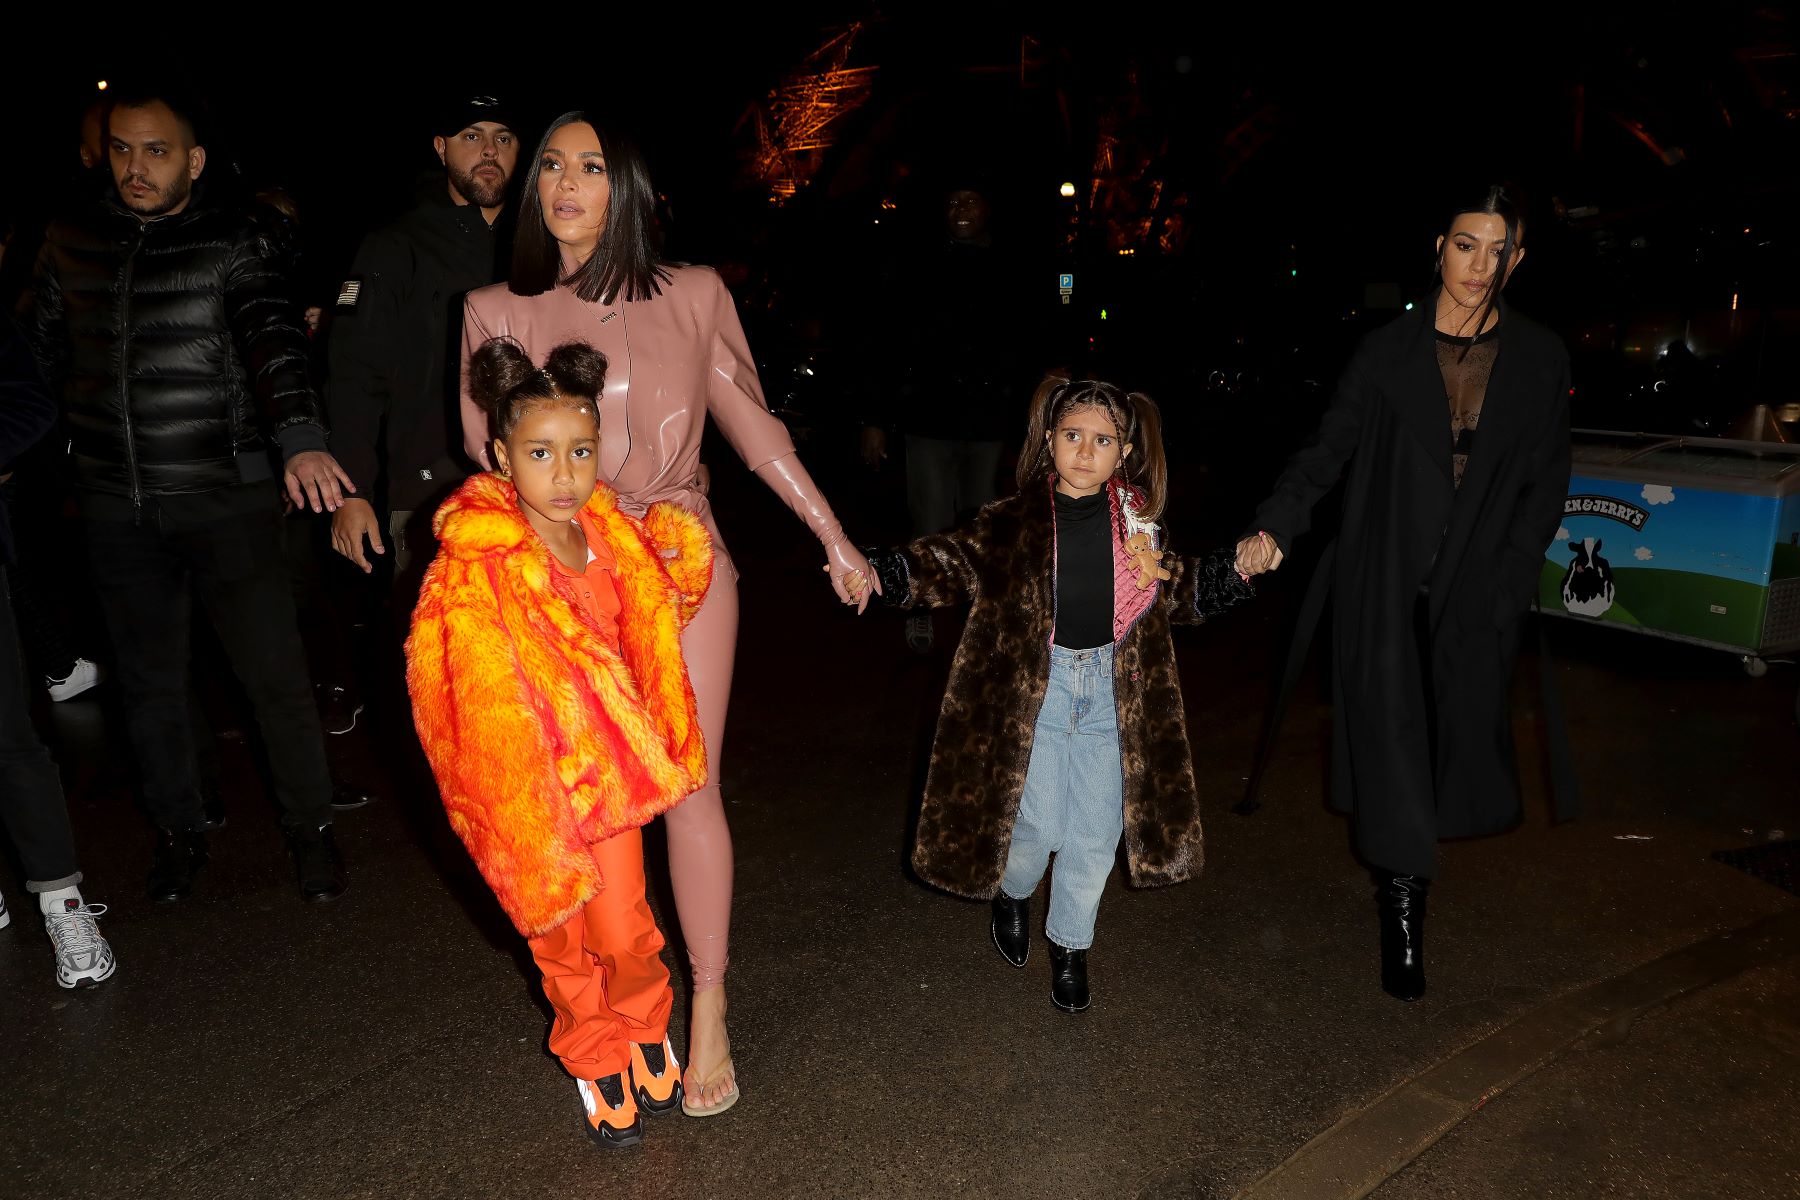 (L to R) North West, Kim Kardashian, Penelope Disick, and Kourtney Kardashian near the Eiffel Tower in Paris